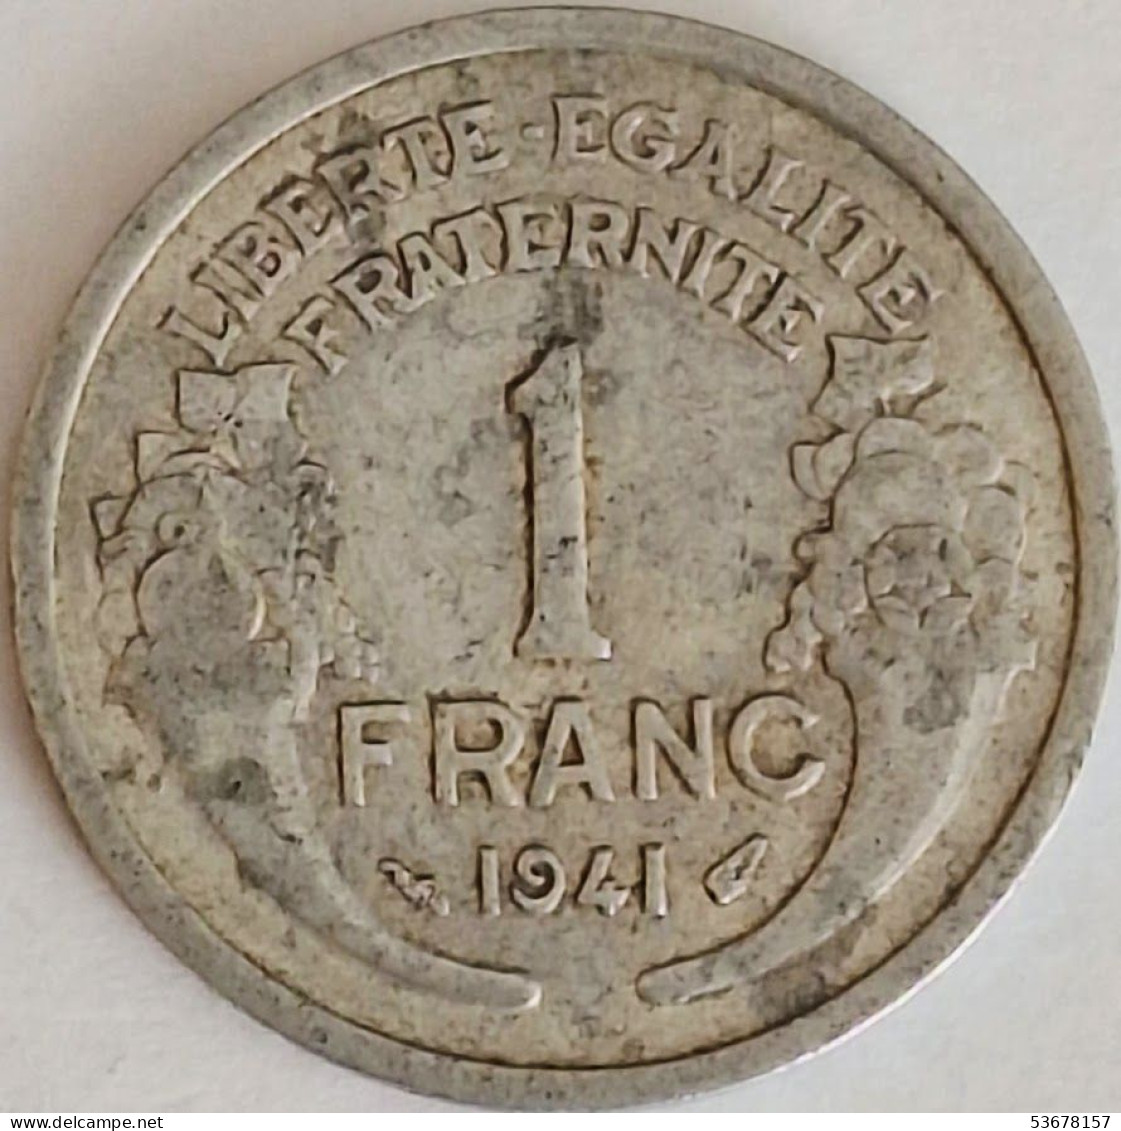 France - Franc 1941, KM# 885a.1 (#4080) - 1 Franc